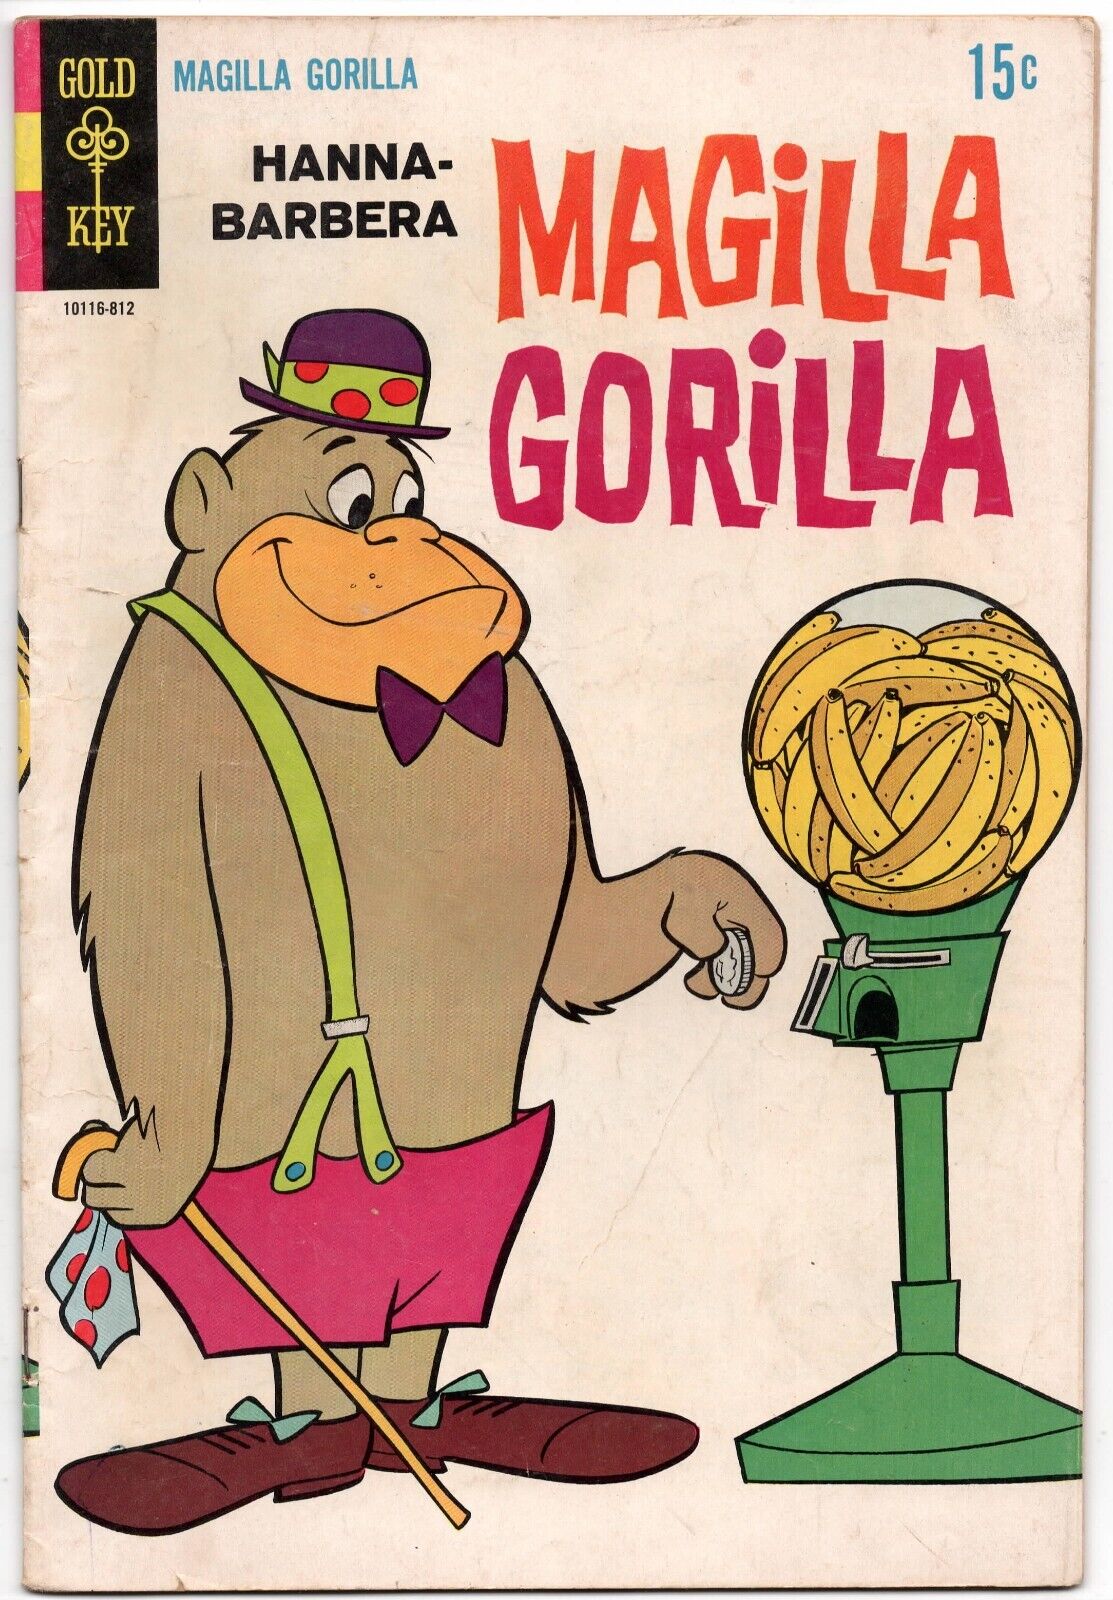 Magilla Gorilla #10 Hanna Barbera 1968 Gold Key Comics Banana Vending Machine